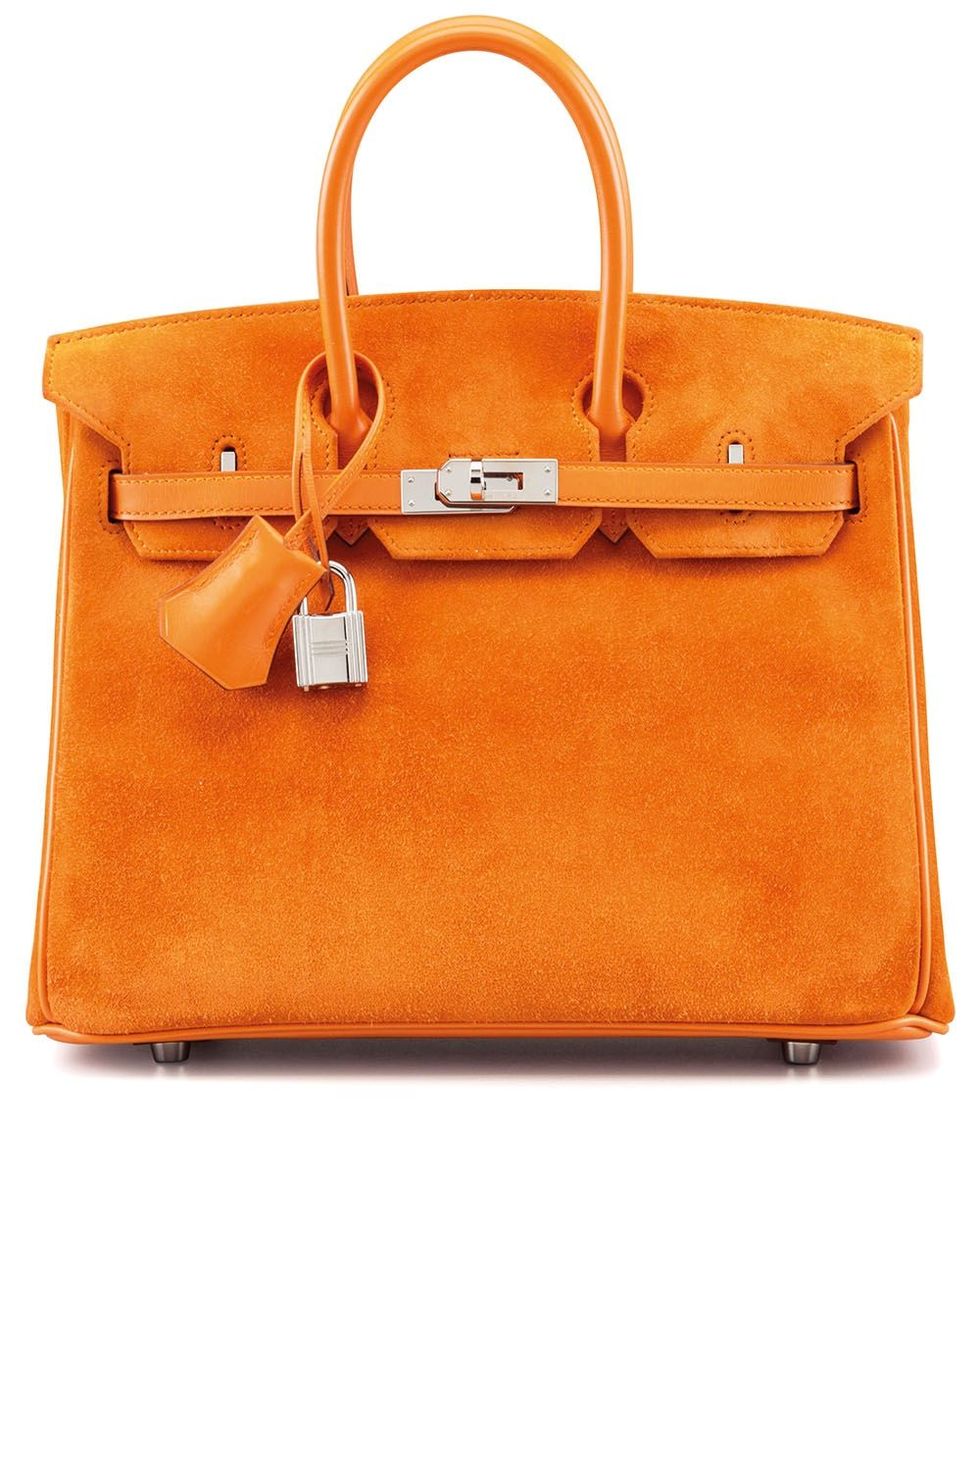 Handbag, Bag, Leather, Orange, Fashion accessory, Birkin bag, Yellow, Tan, Kelly bag, Brown, 